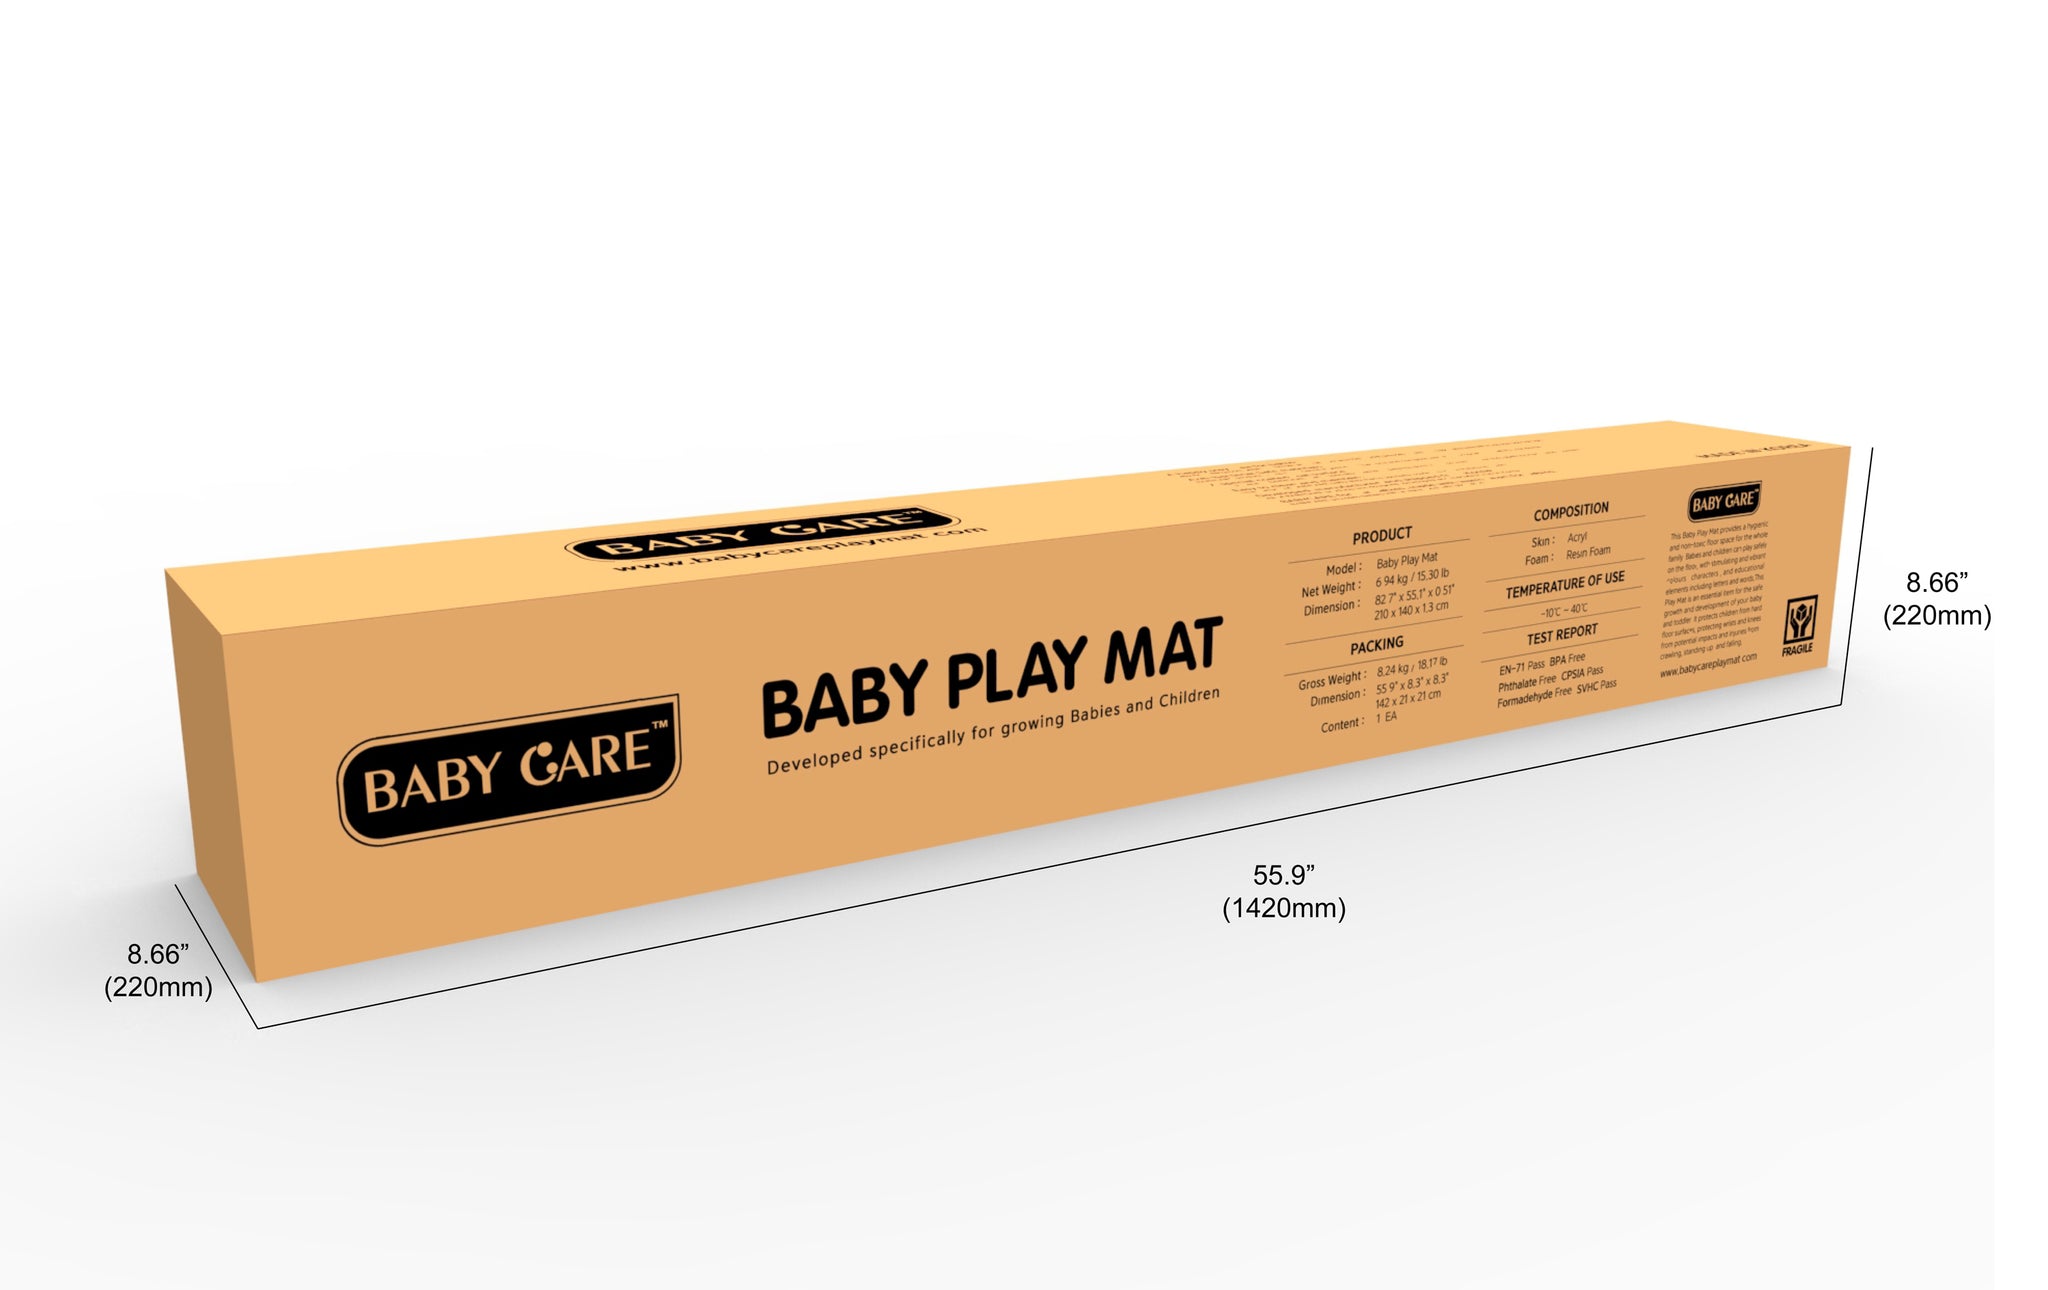 BABYCARE Playmat-Renaissance